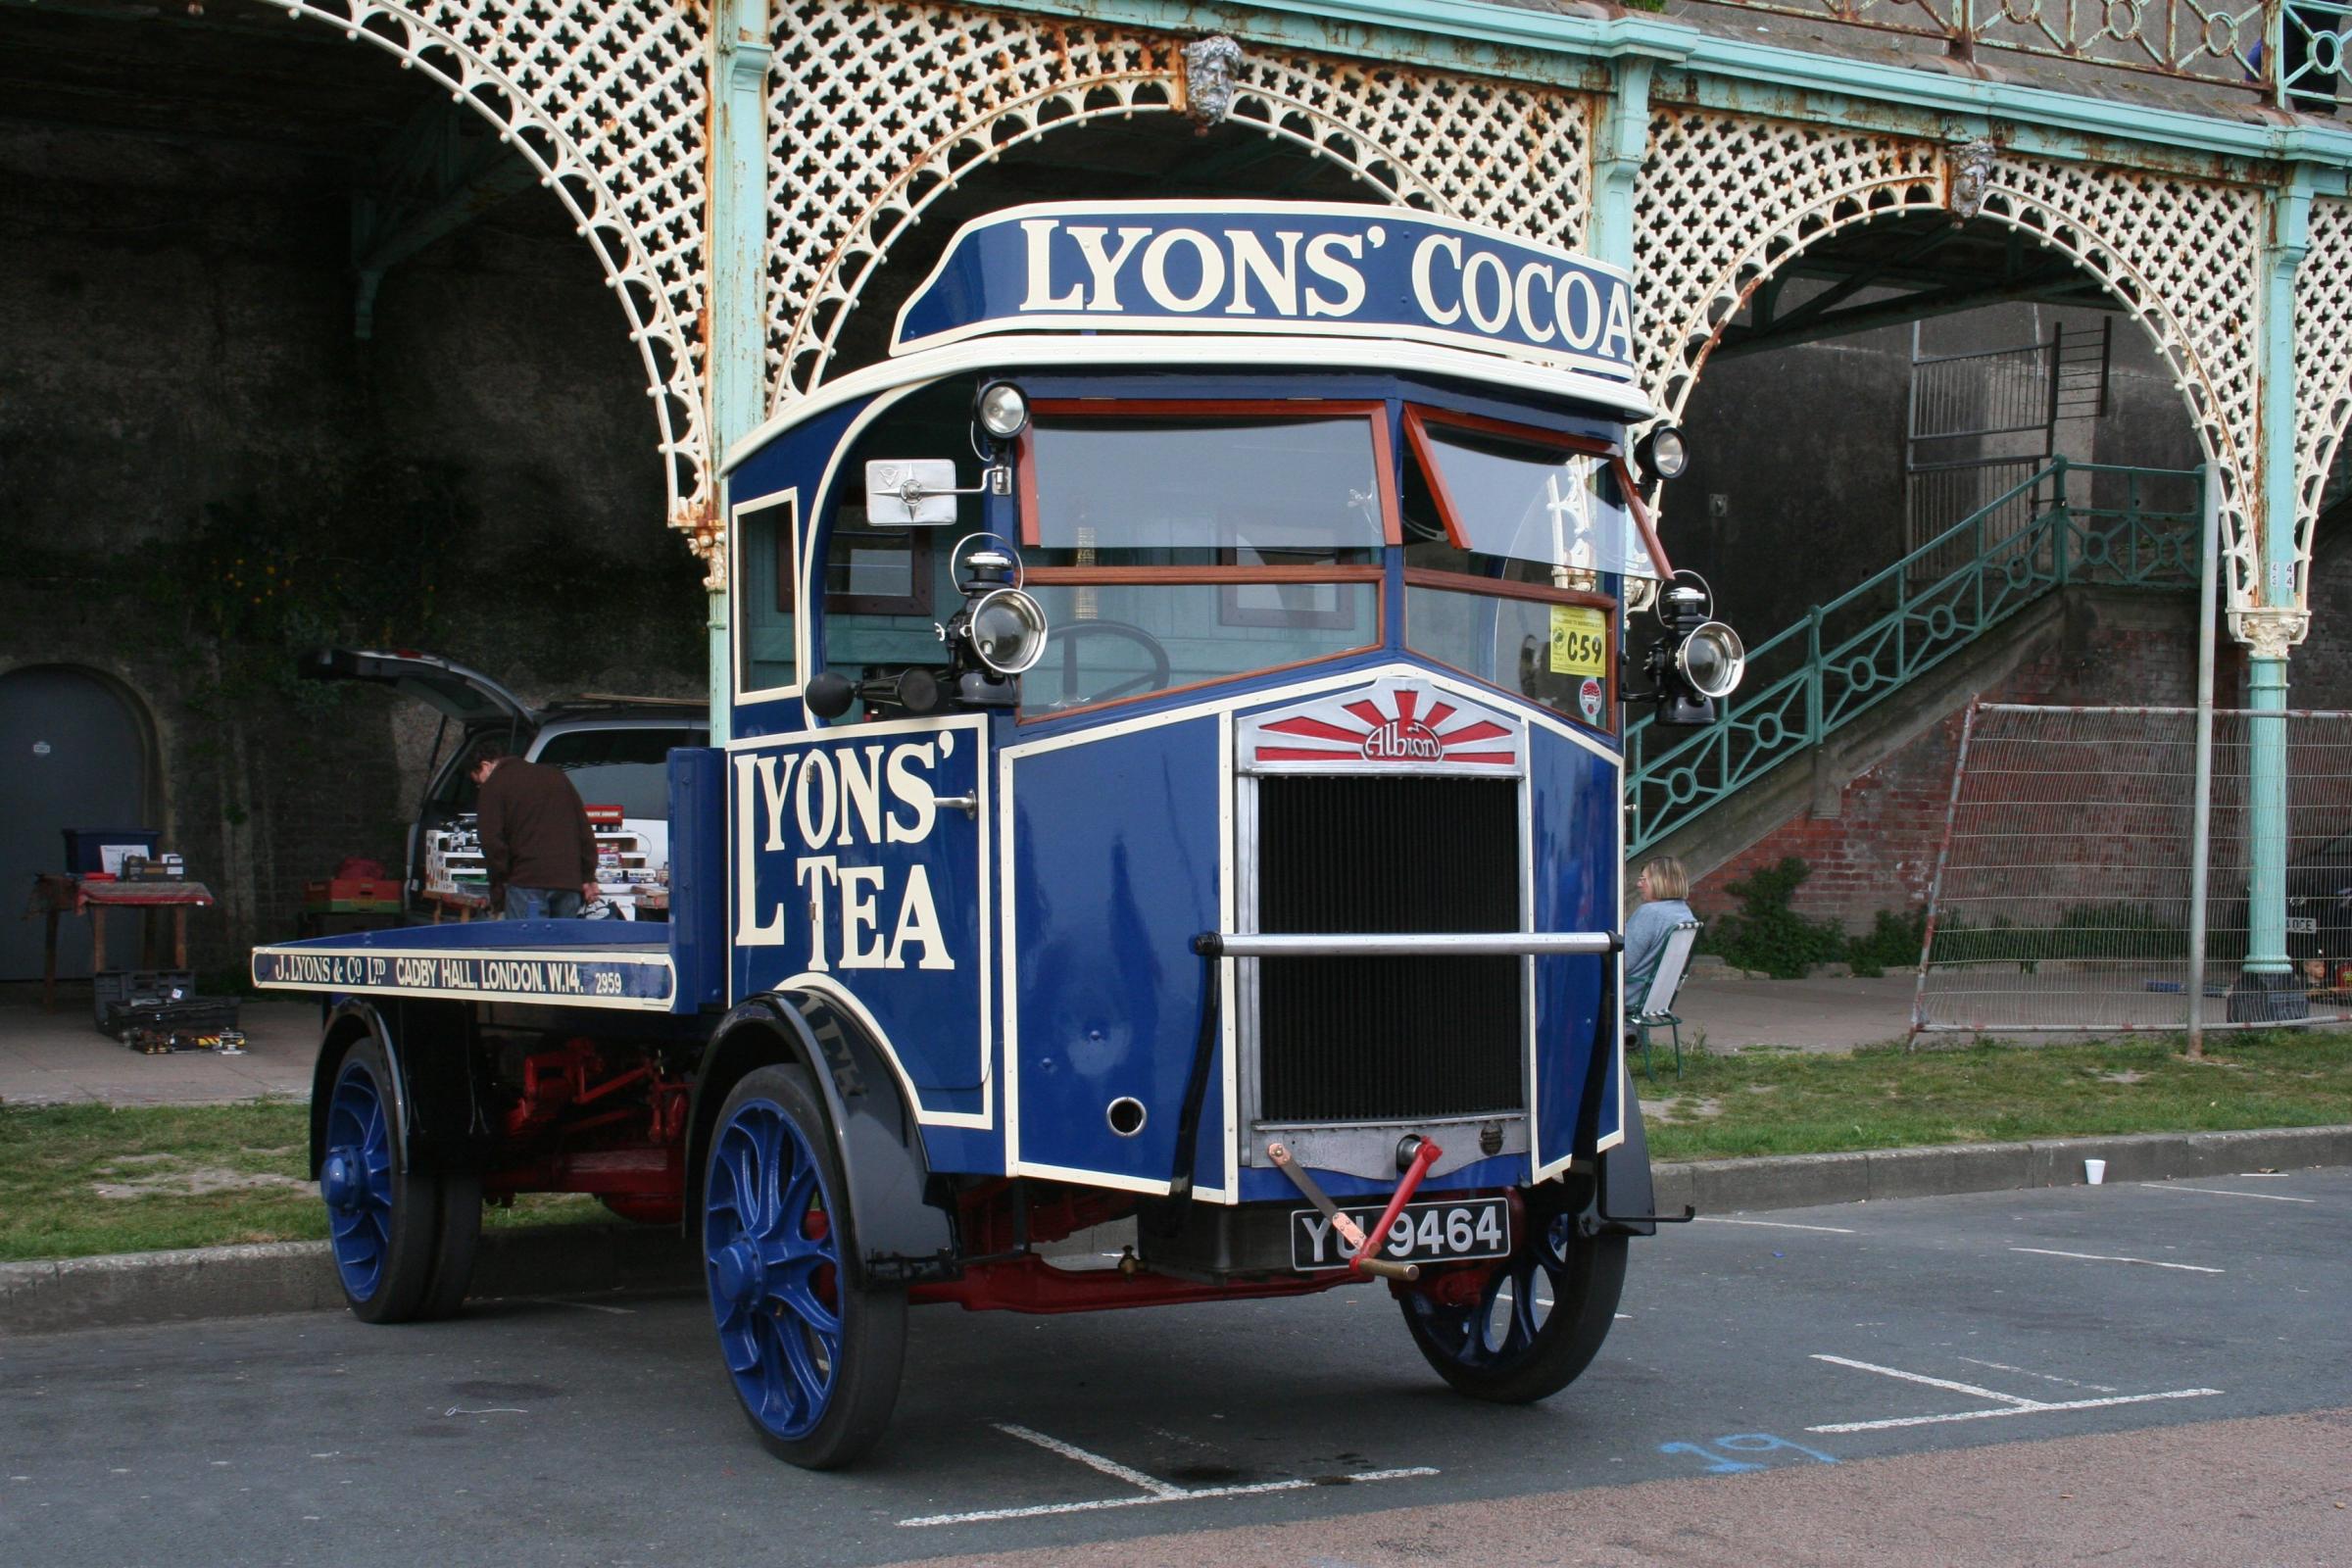 One the last remaining J Lyons & Co tea lorries 